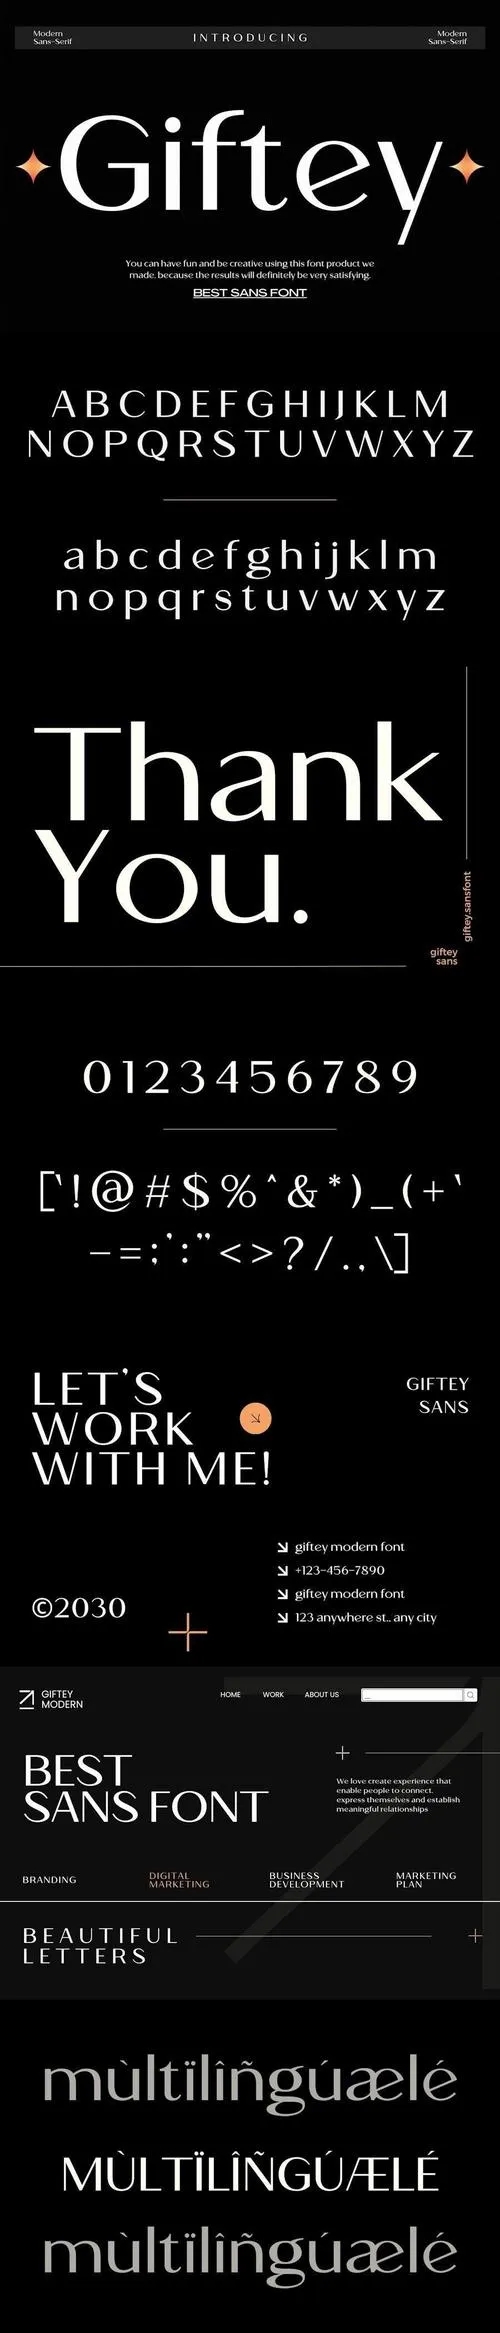 Giftey Modern Futuristic Font